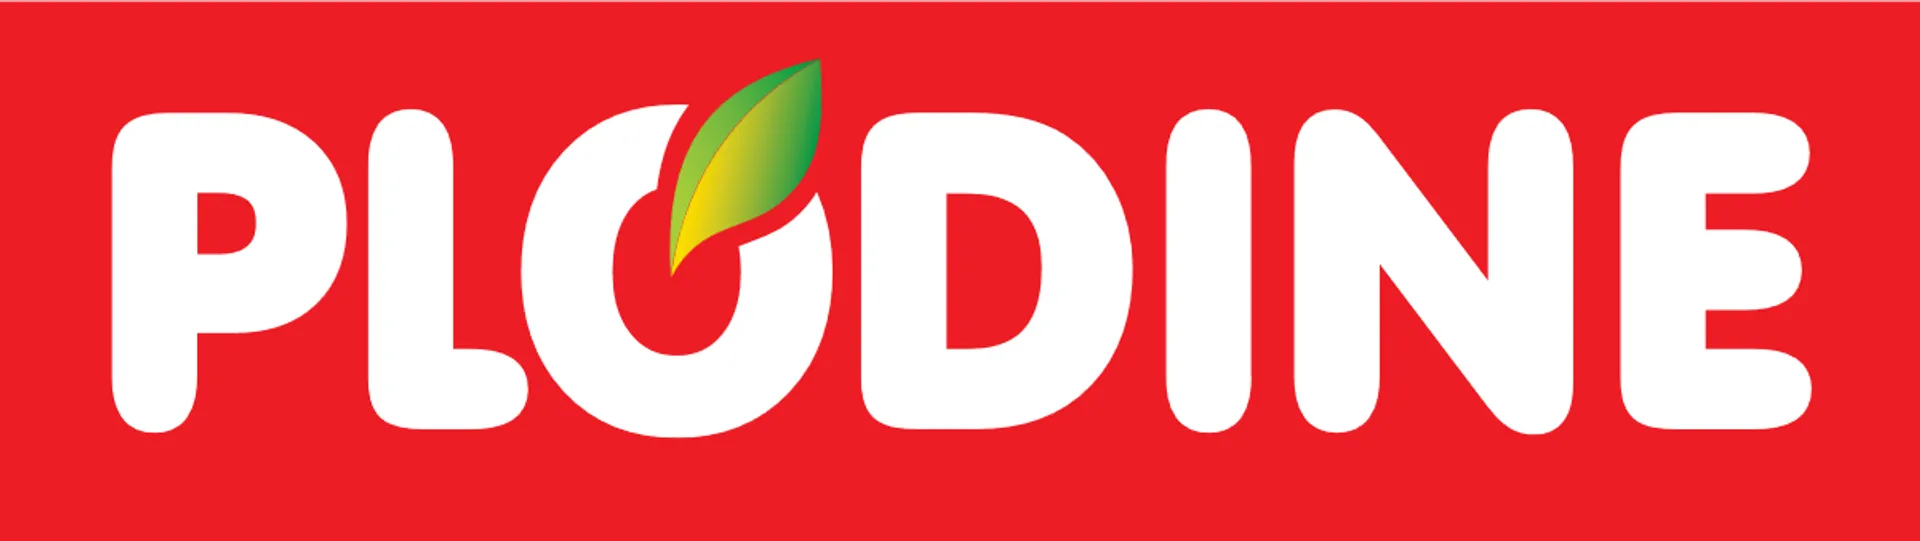 PLODINE logo